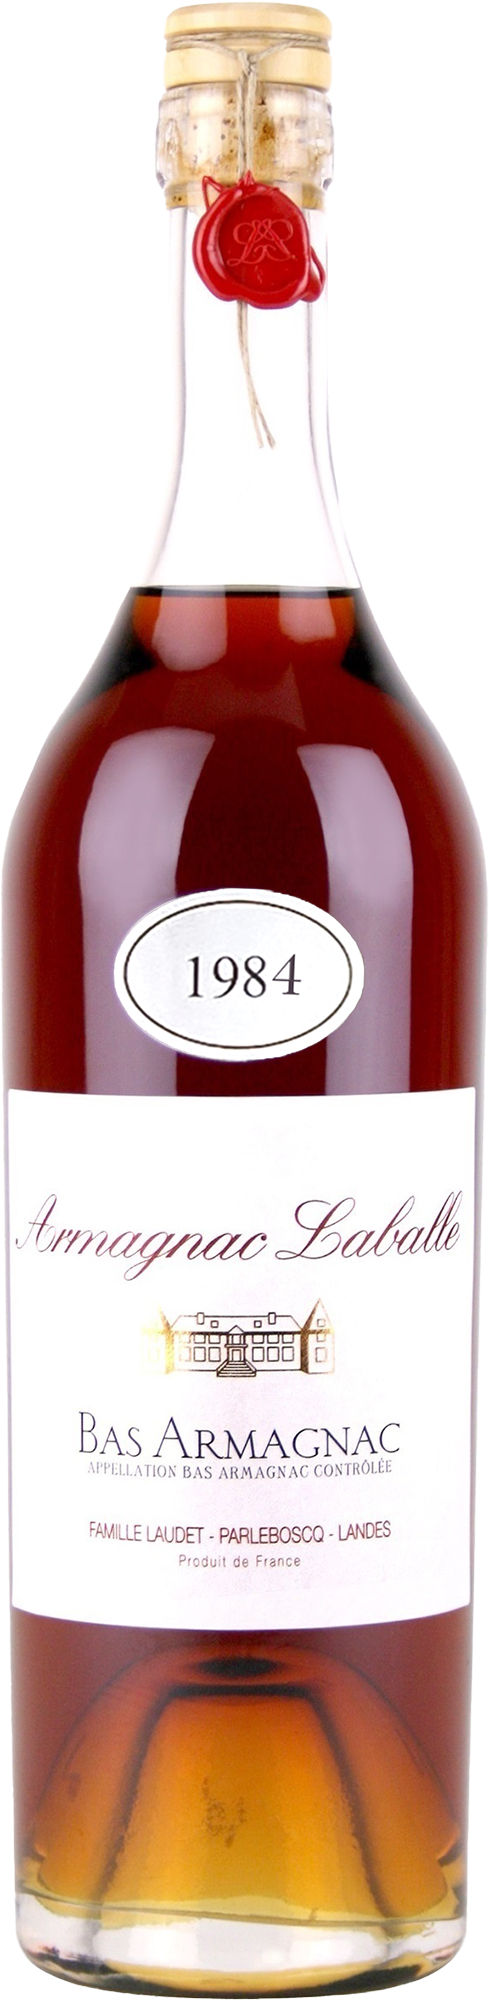 Château Laballe Bas Armagnac 1984